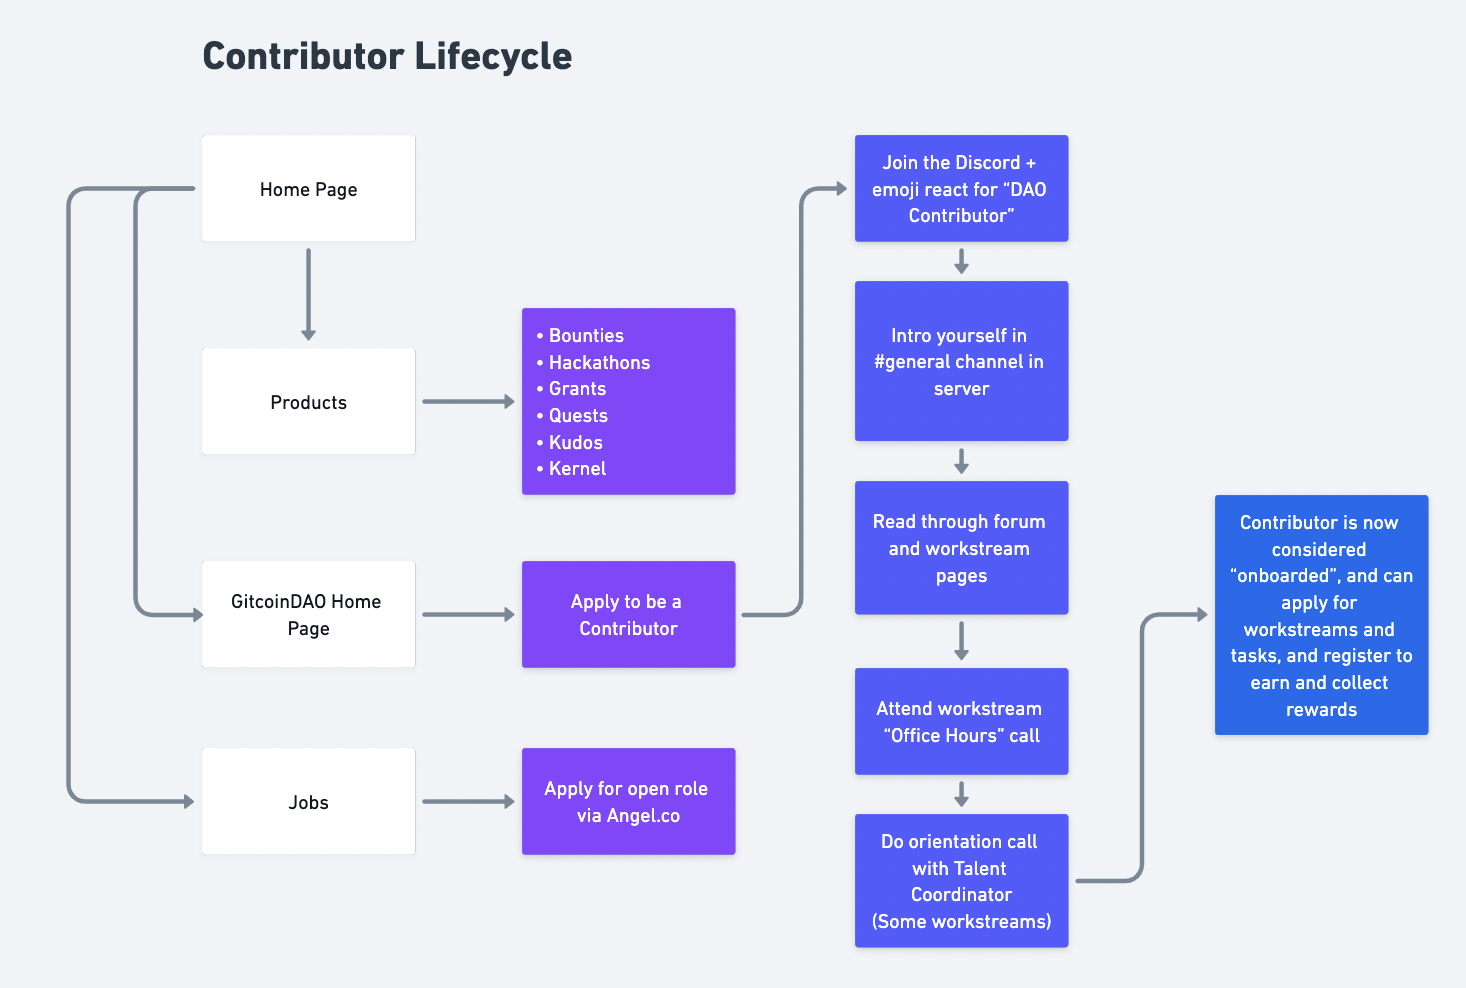 The Contributor Lifecycle at GitcoinDAO.